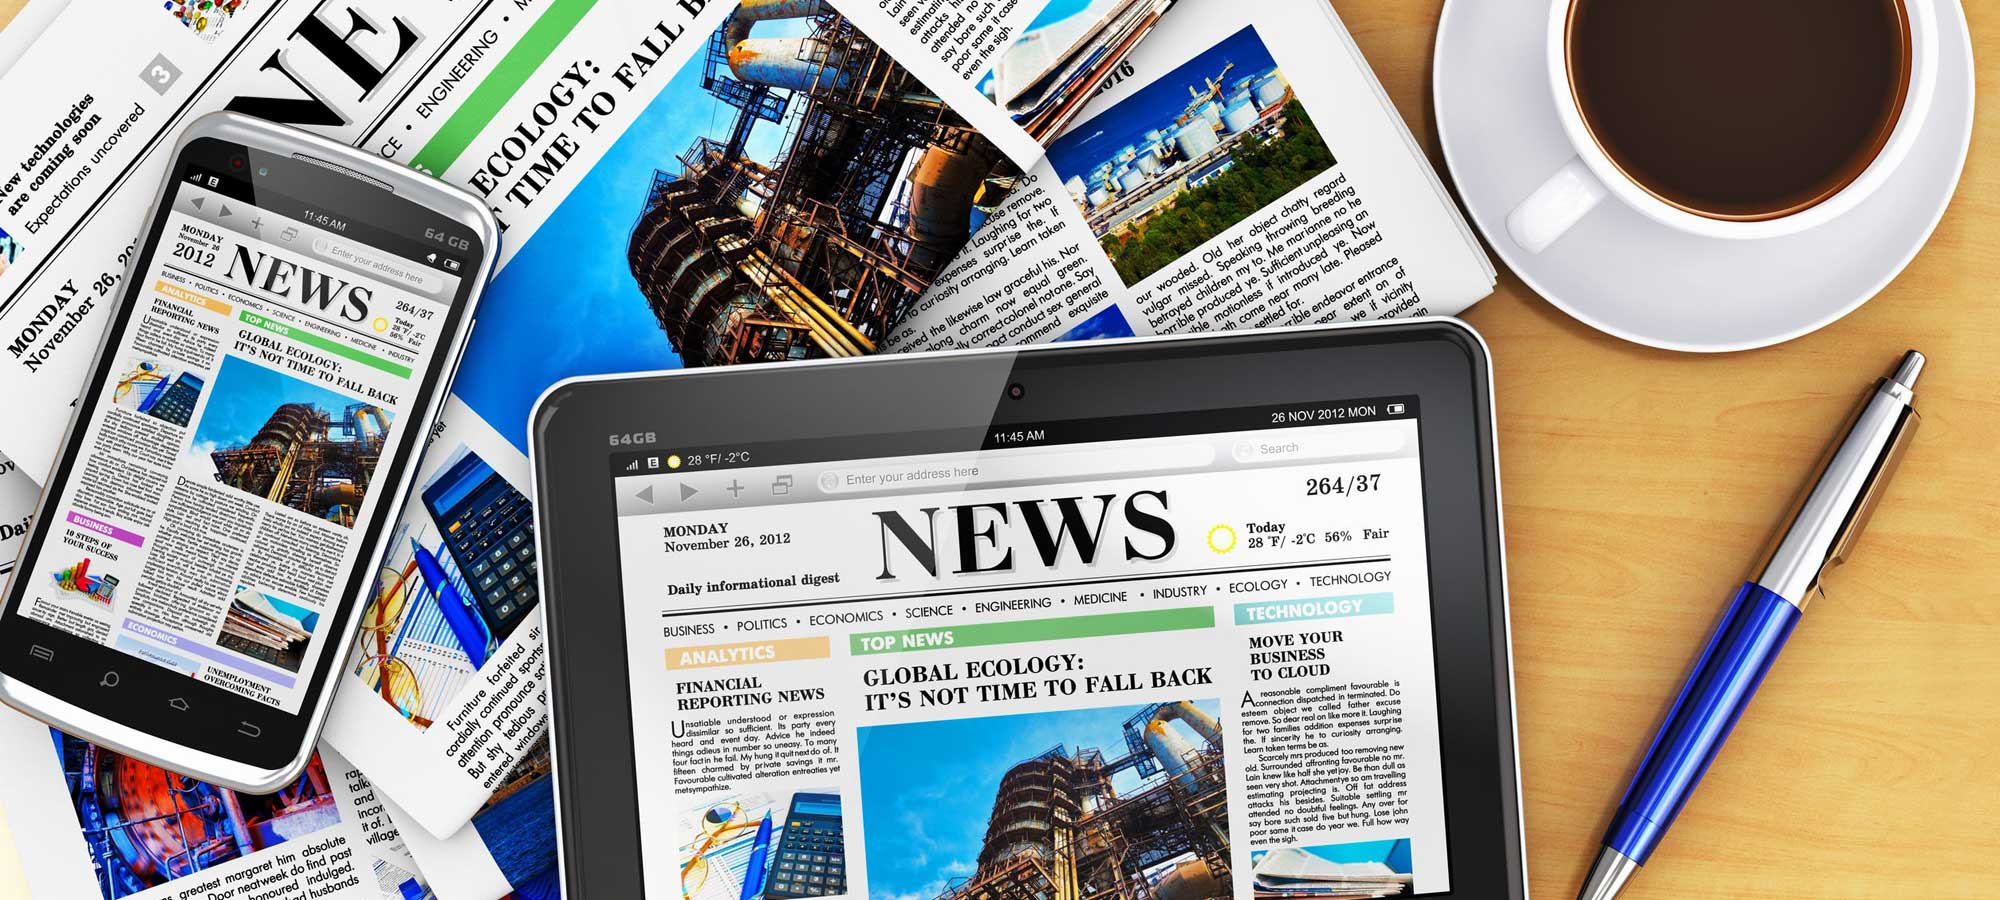 newspaper-phone-tablet-news-current-event